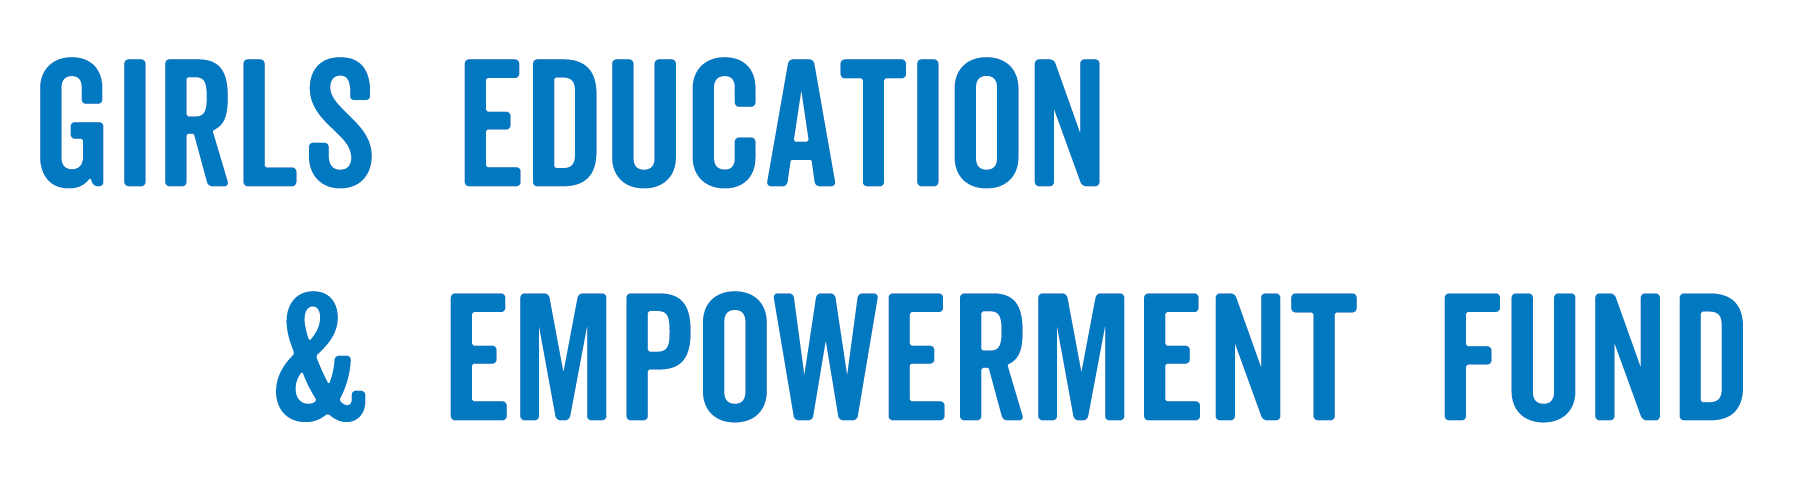 Girls Education & Empowerment Fund